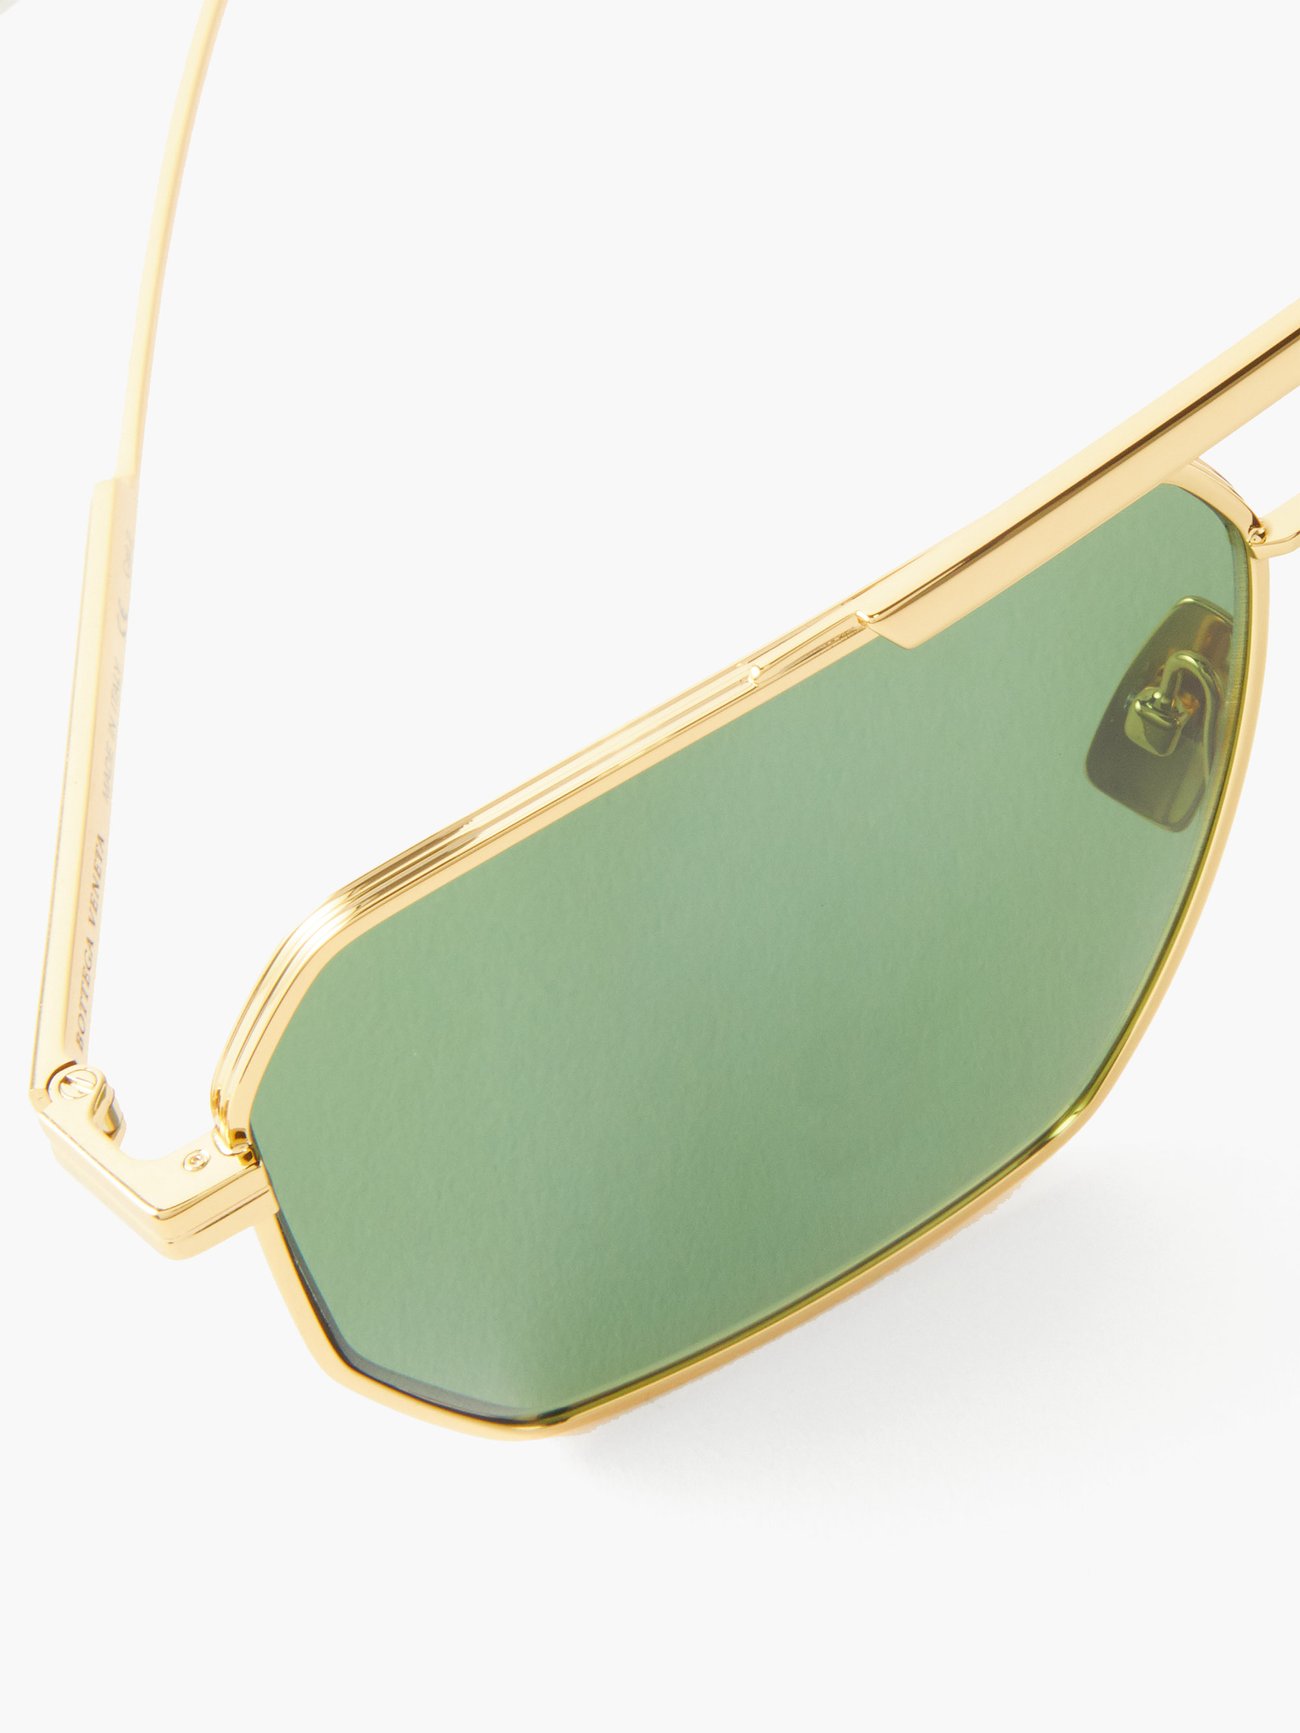 Oversized square gold aviator sunglasses Bottega Veneta BV 1012 col.004  green lenses, Occhiali